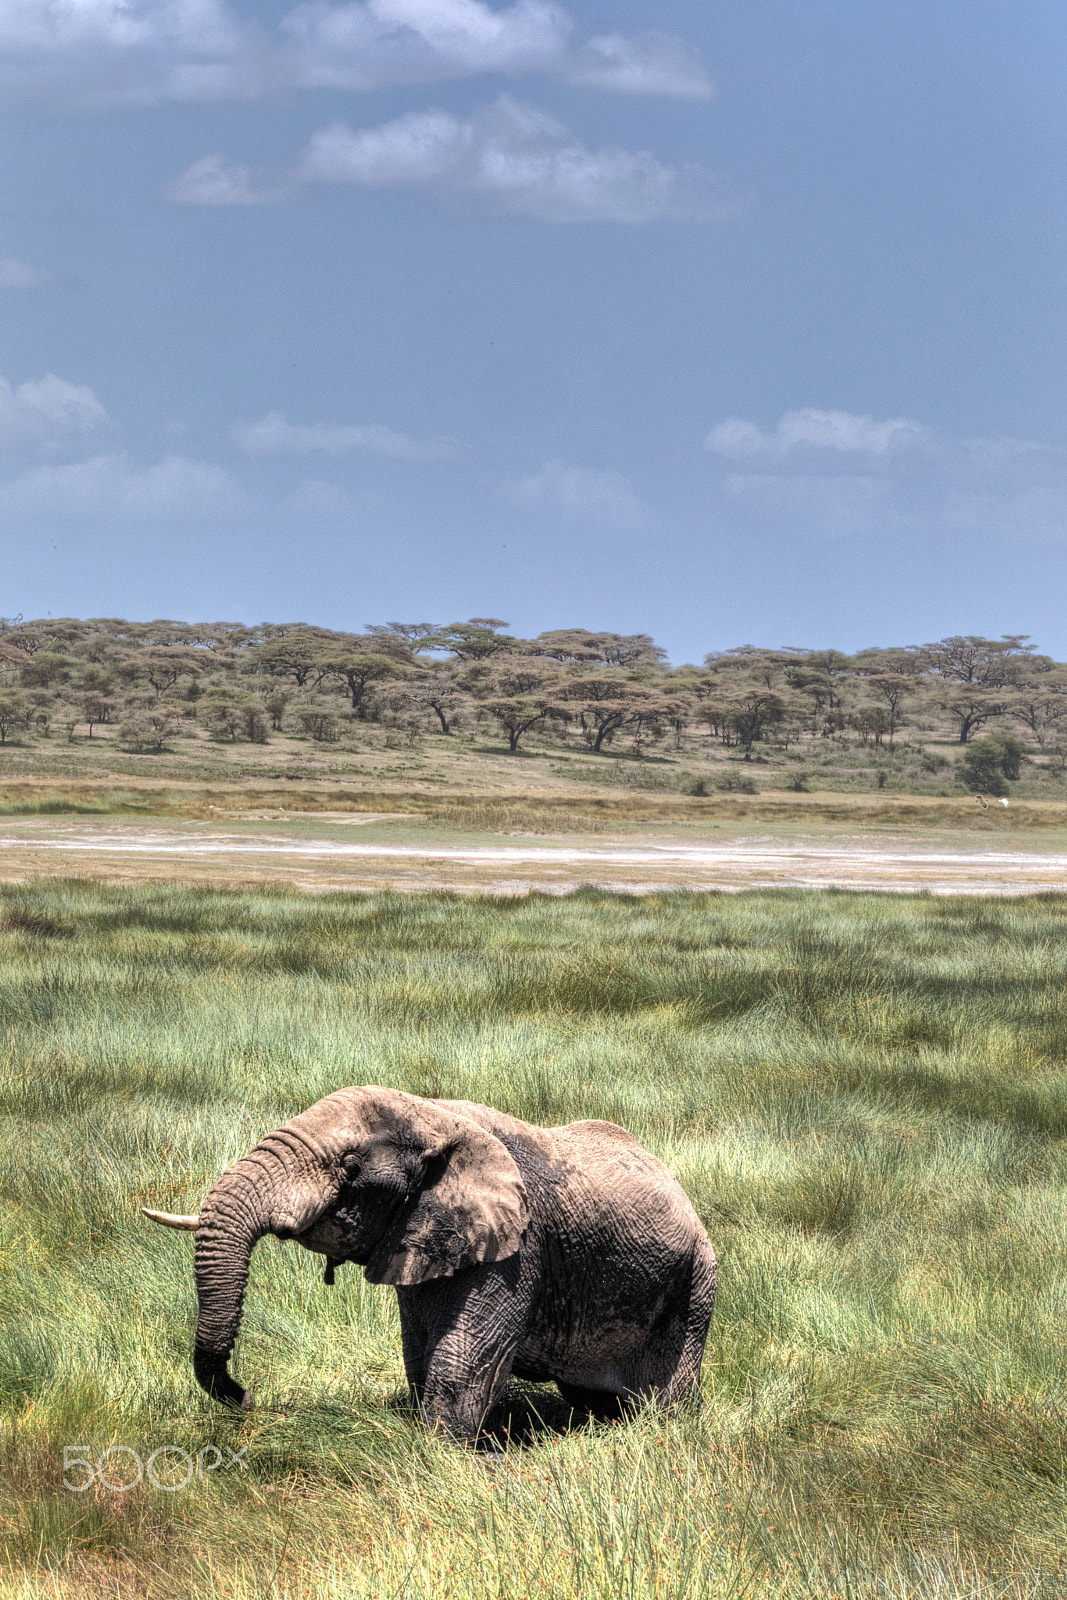 150-600mm F5-6.3 DG OS HSM | Contemporary 015 +1.4x sample photo. Elephant savanah shot photography